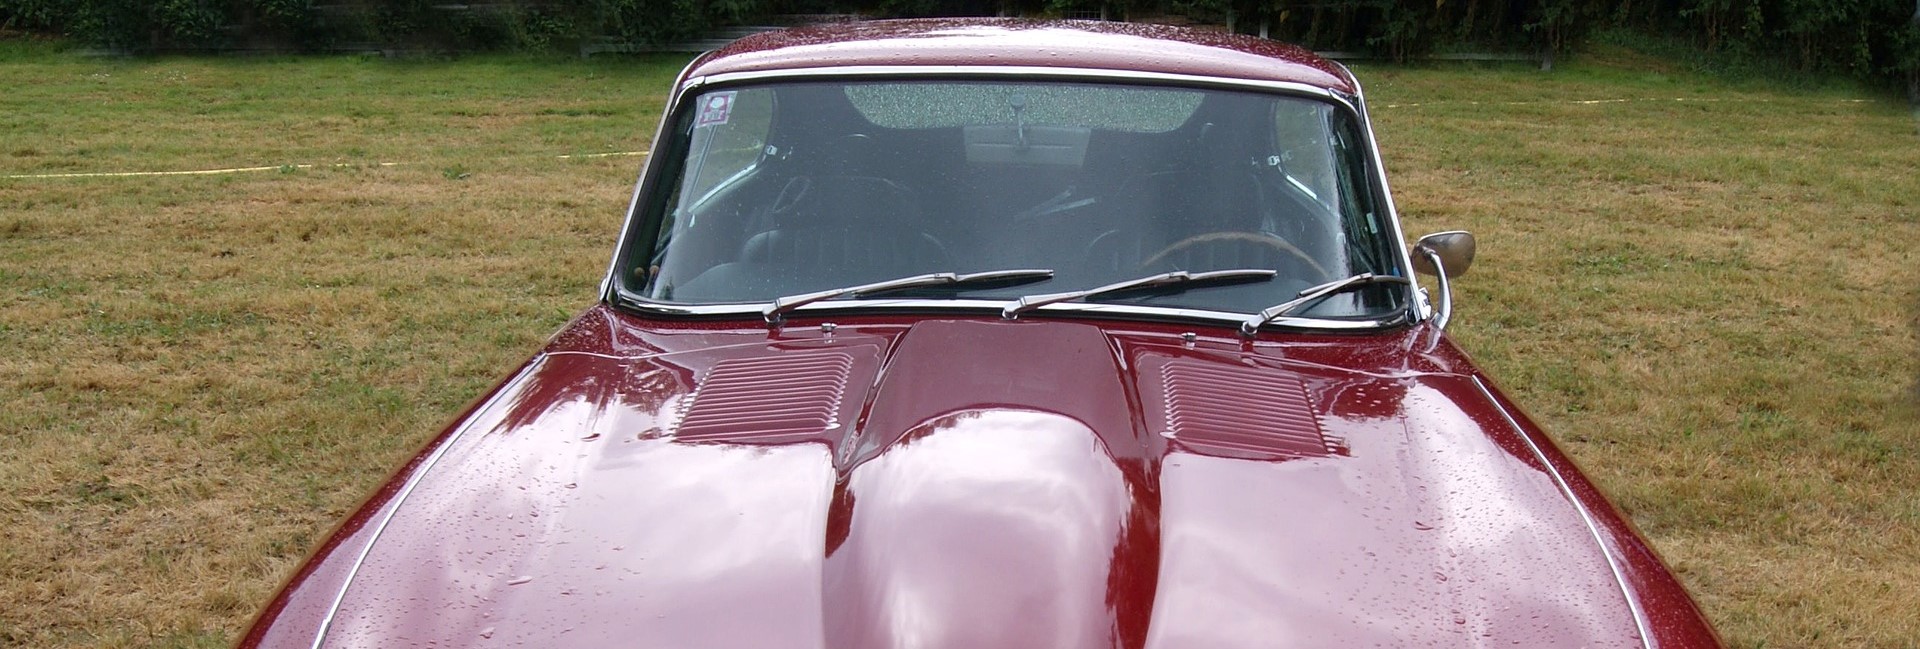 Oldtimer Jaguar Gilbert, Arizona | Breast Cancer Car Donations